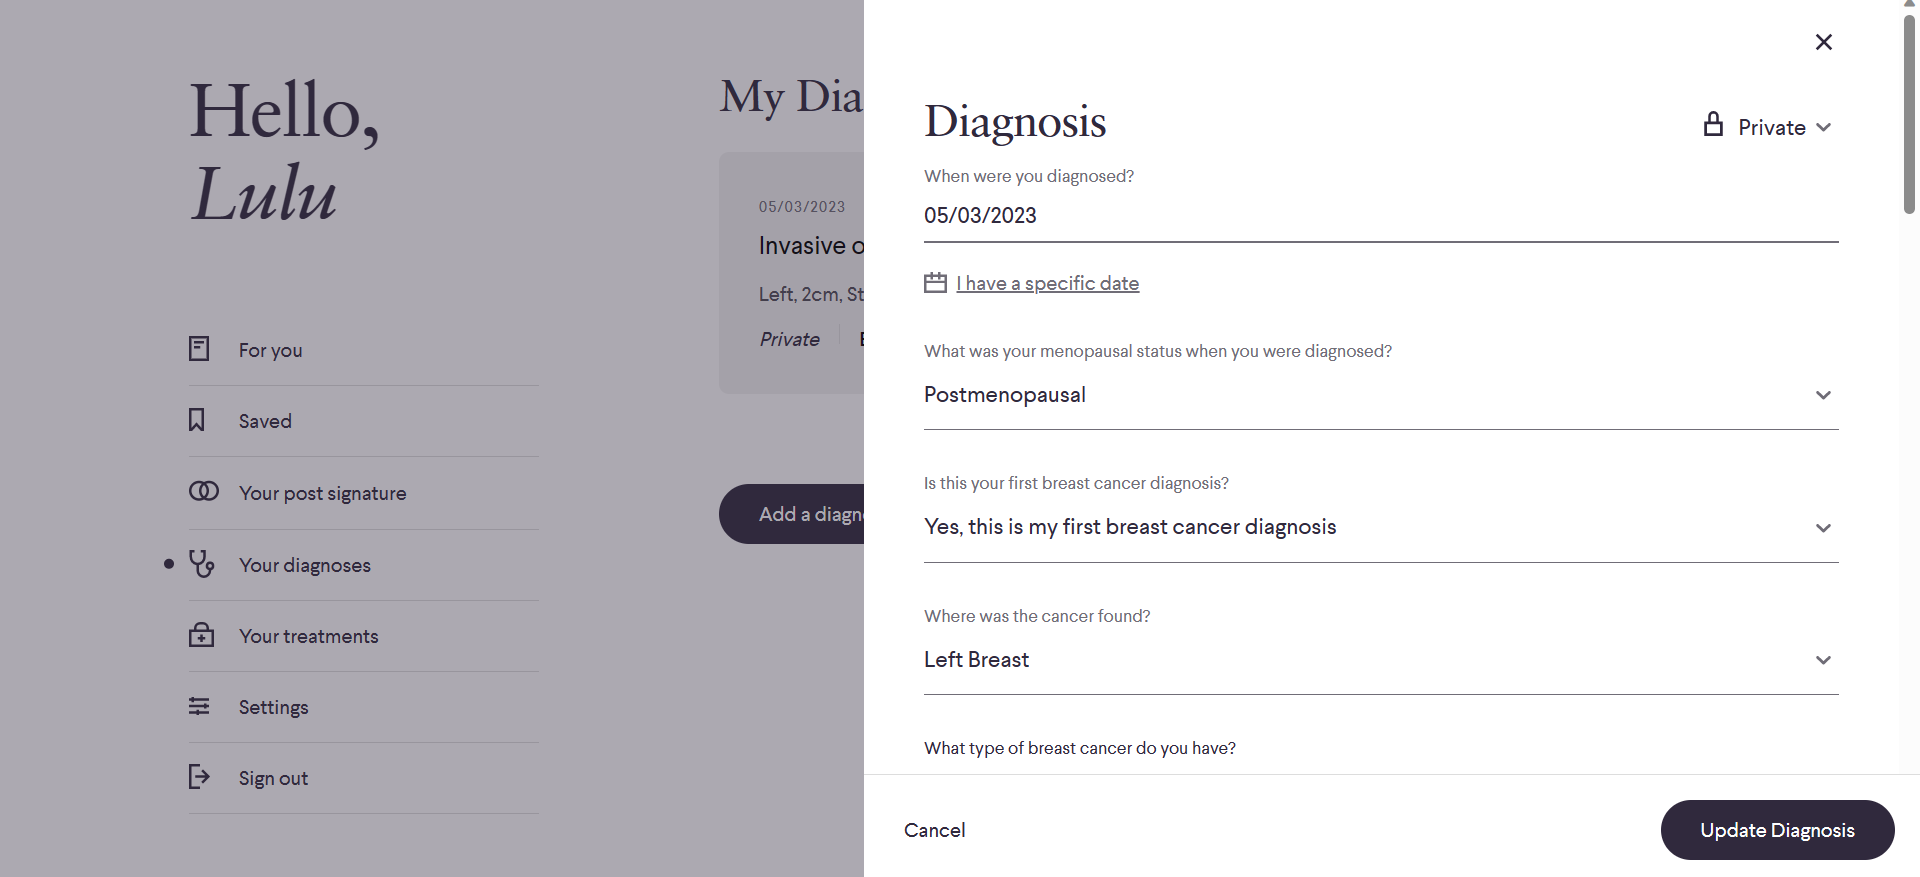 edit diagnosis page image